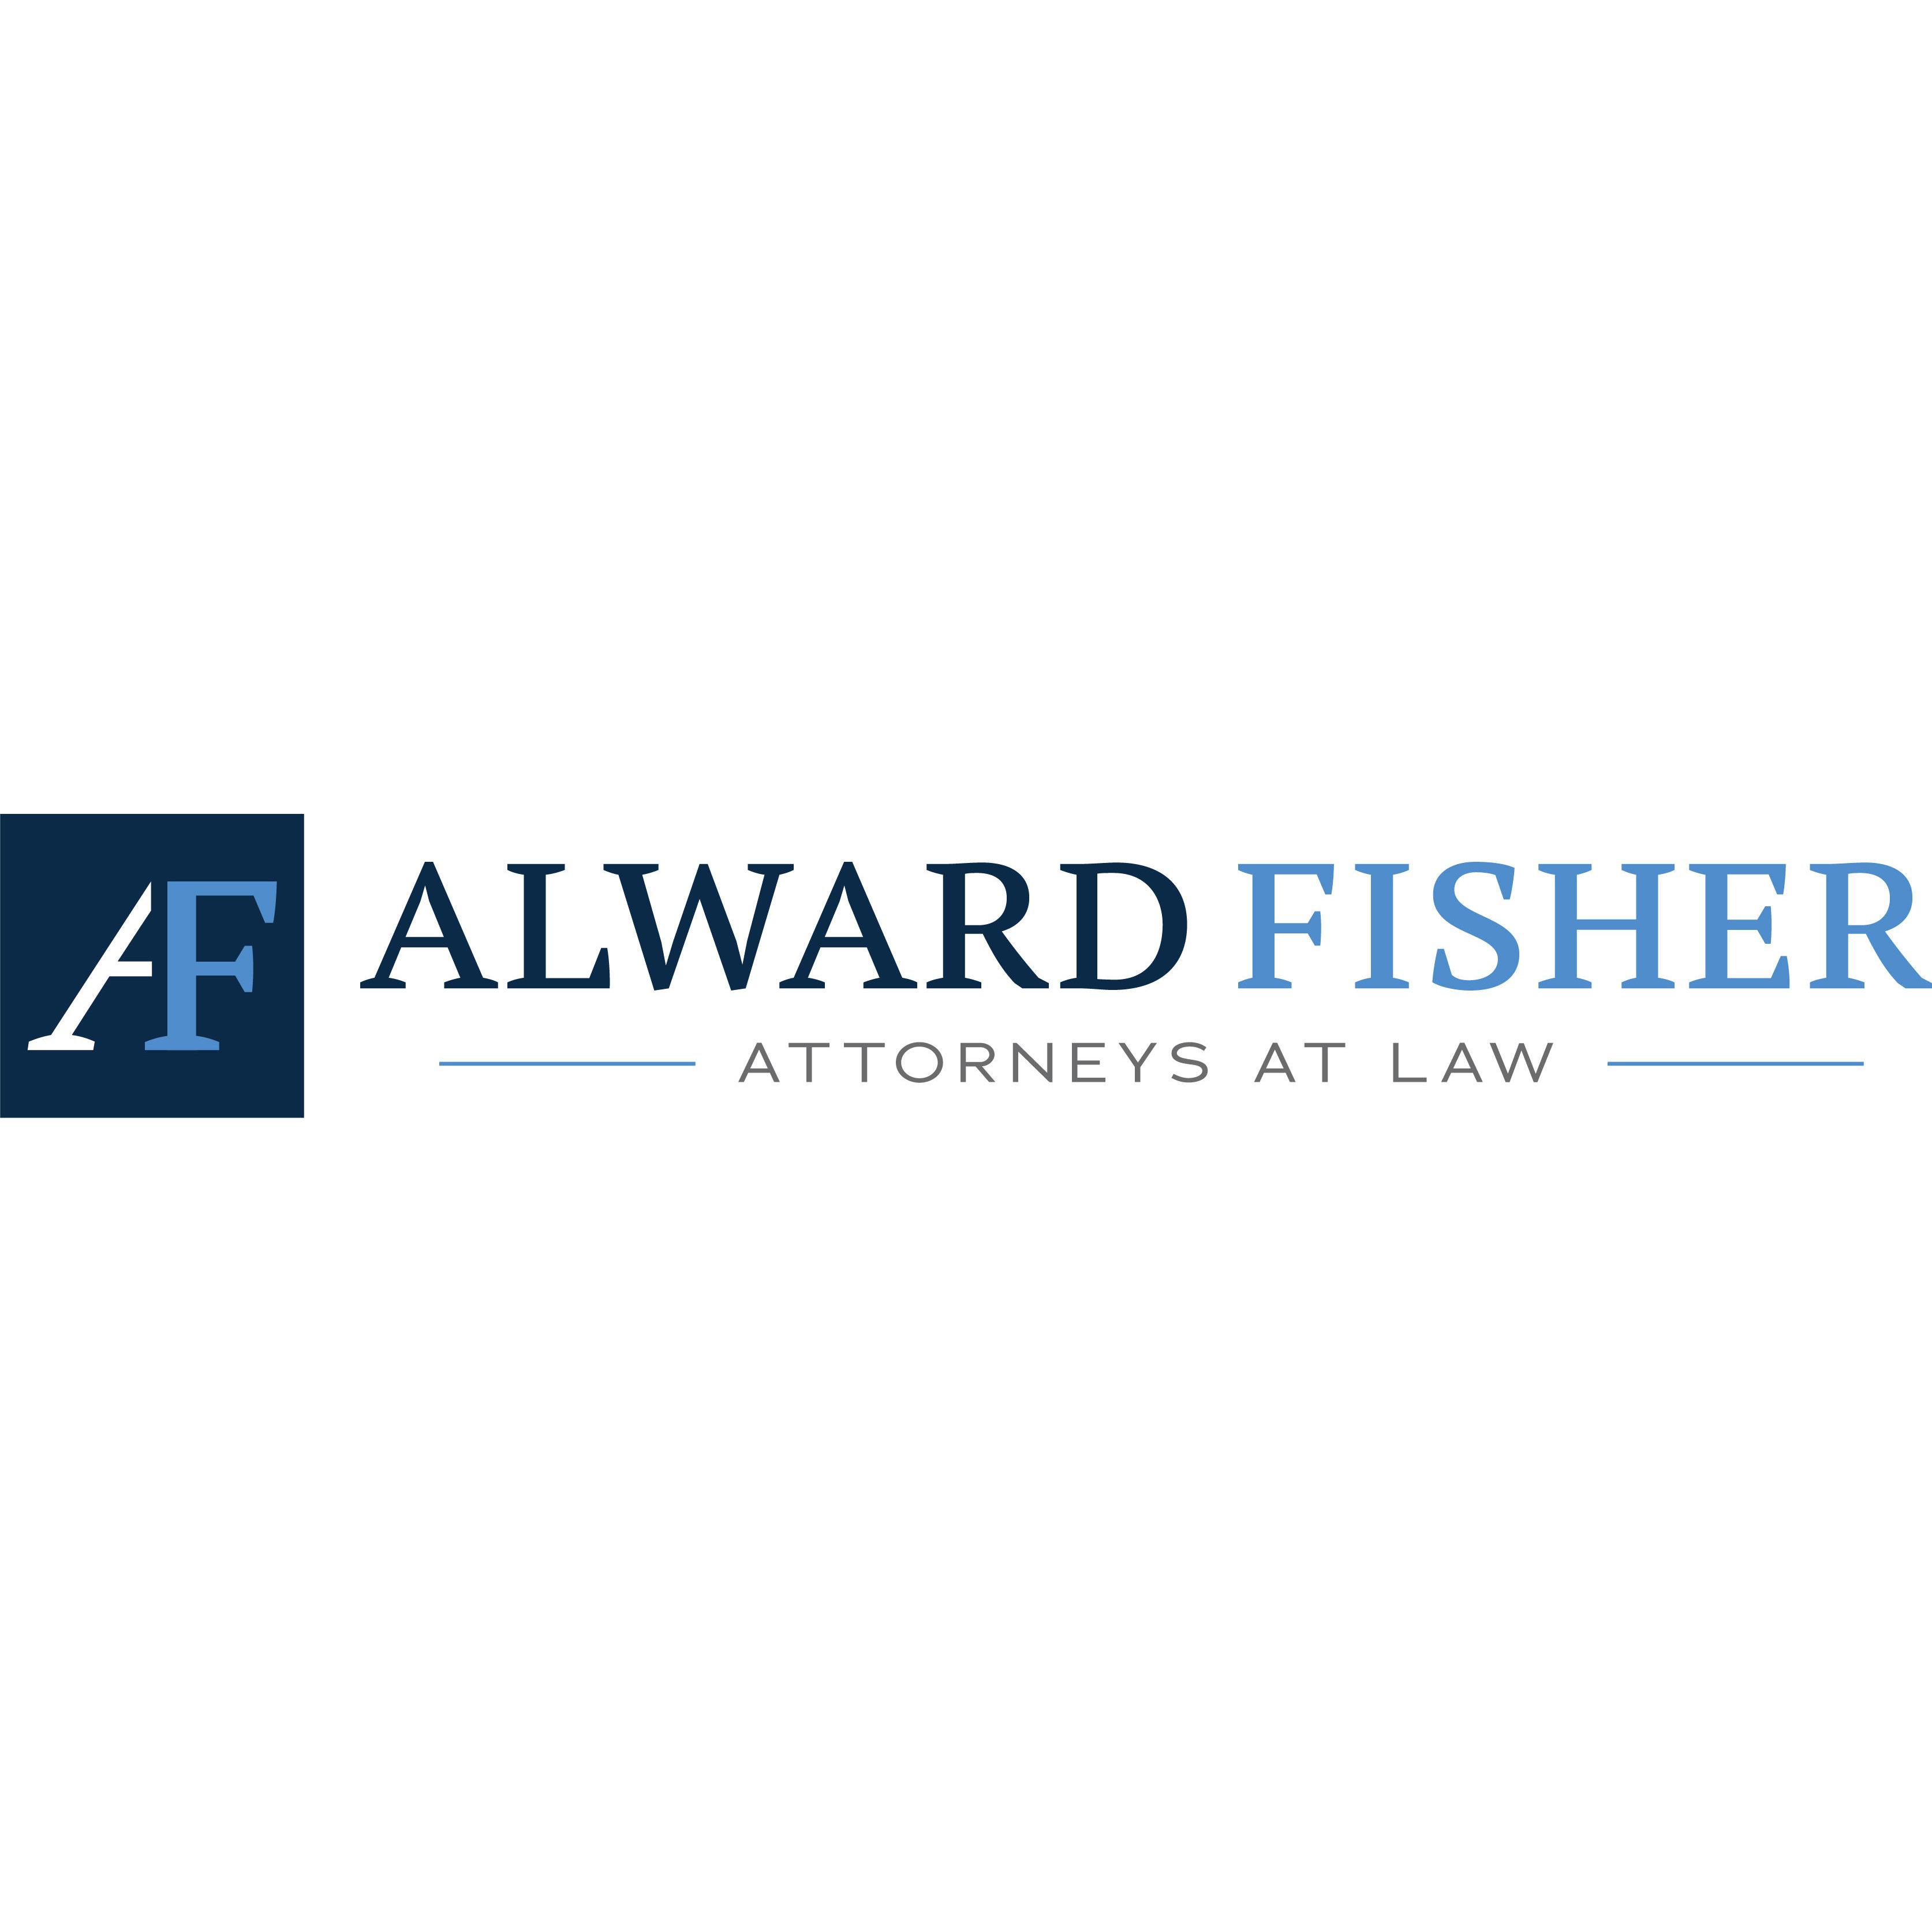 Alward Fisher, Attorneys at Law - Traverse City, MI 49684 - (231)668-9836 | ShowMeLocal.com